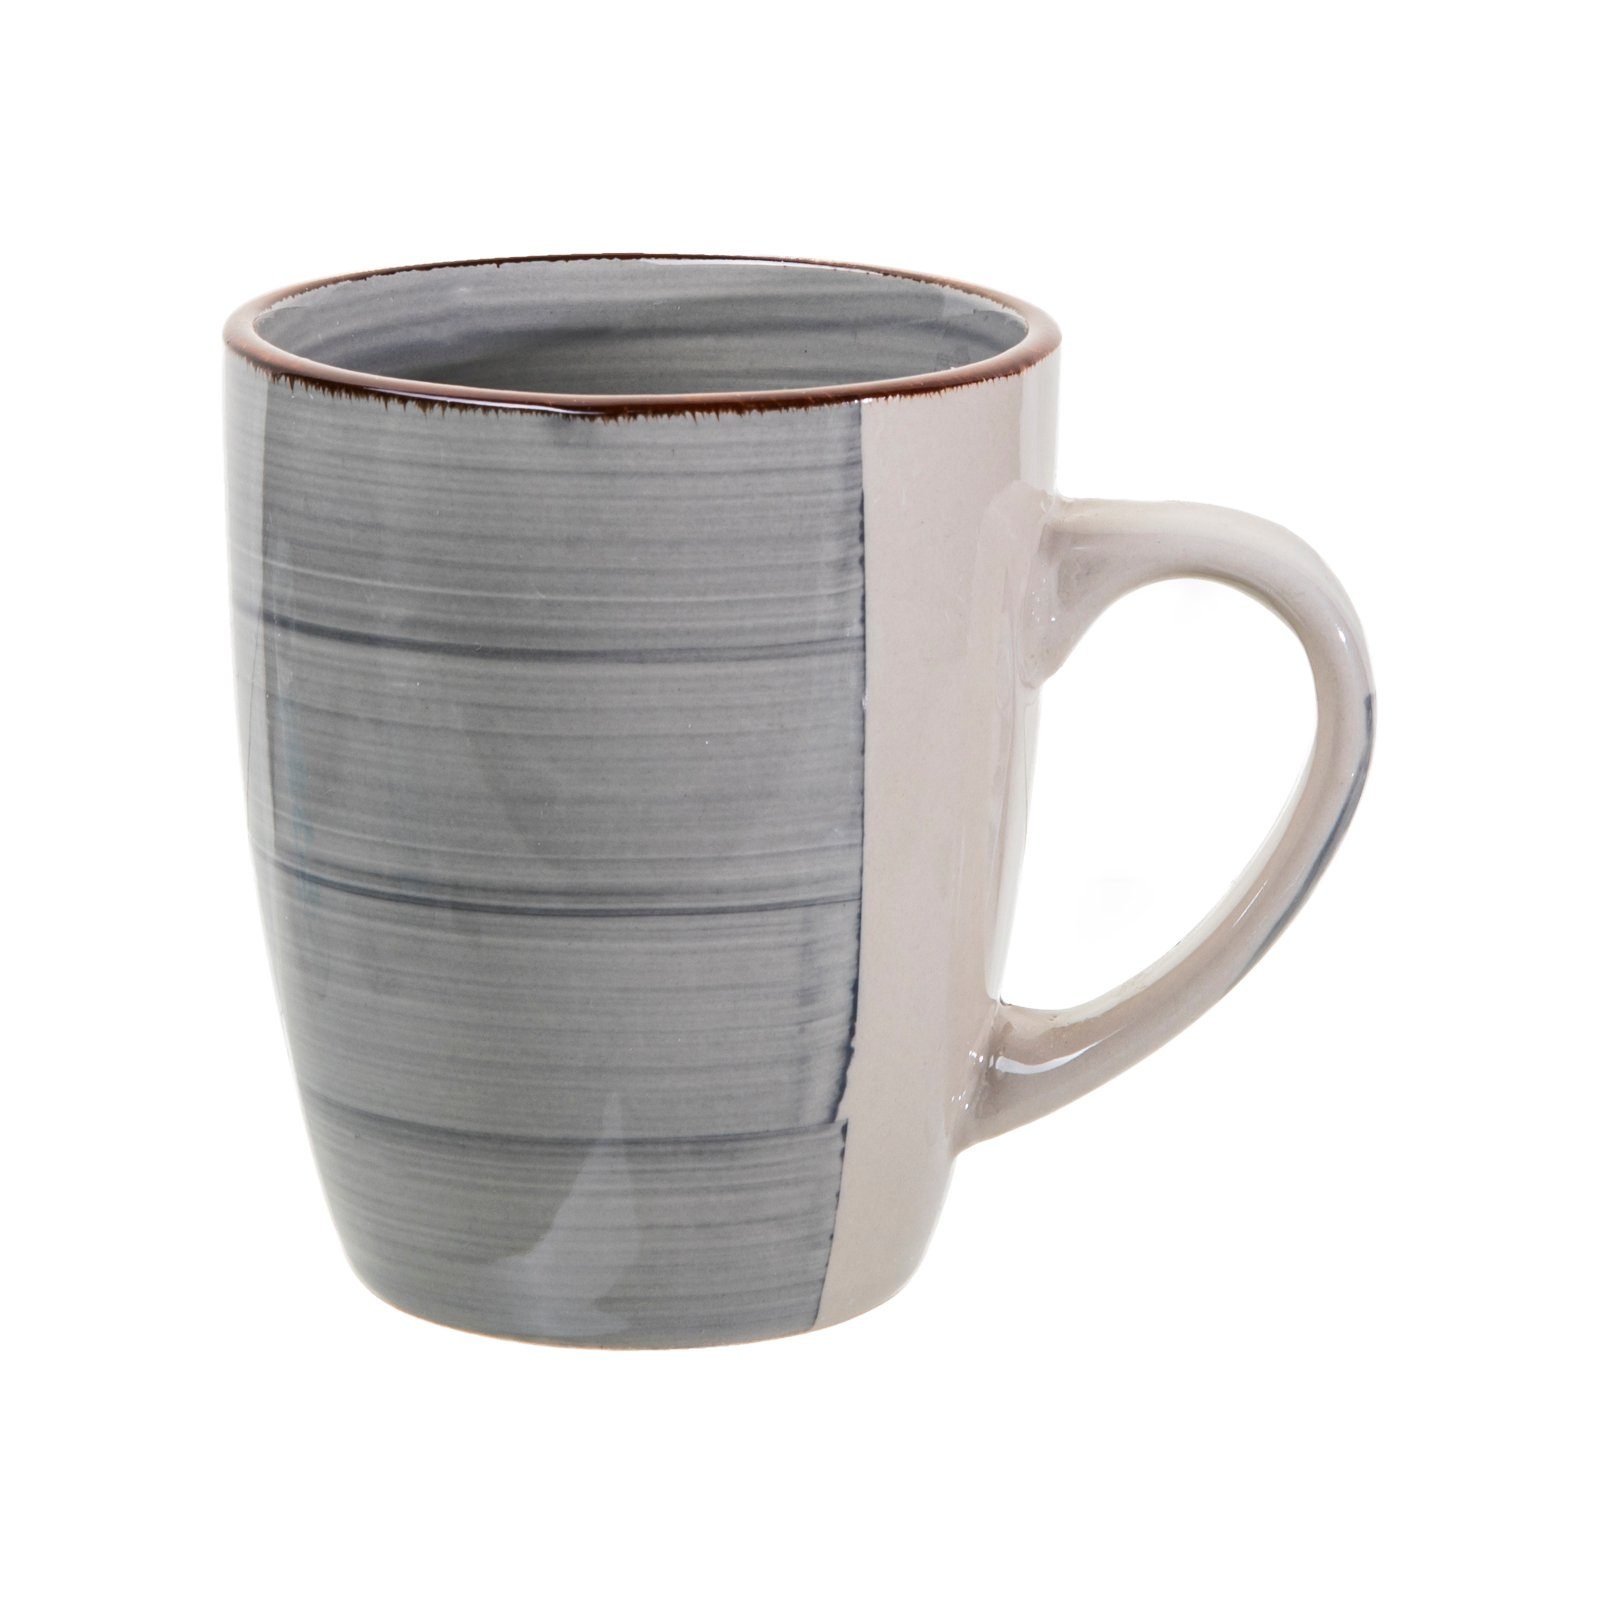 Set Tee PREMIUM Keramik, hochwertige astor24 Kaffeetassen Qualität in Tasse Pott Becher Kaffee Tassen Geschirr,